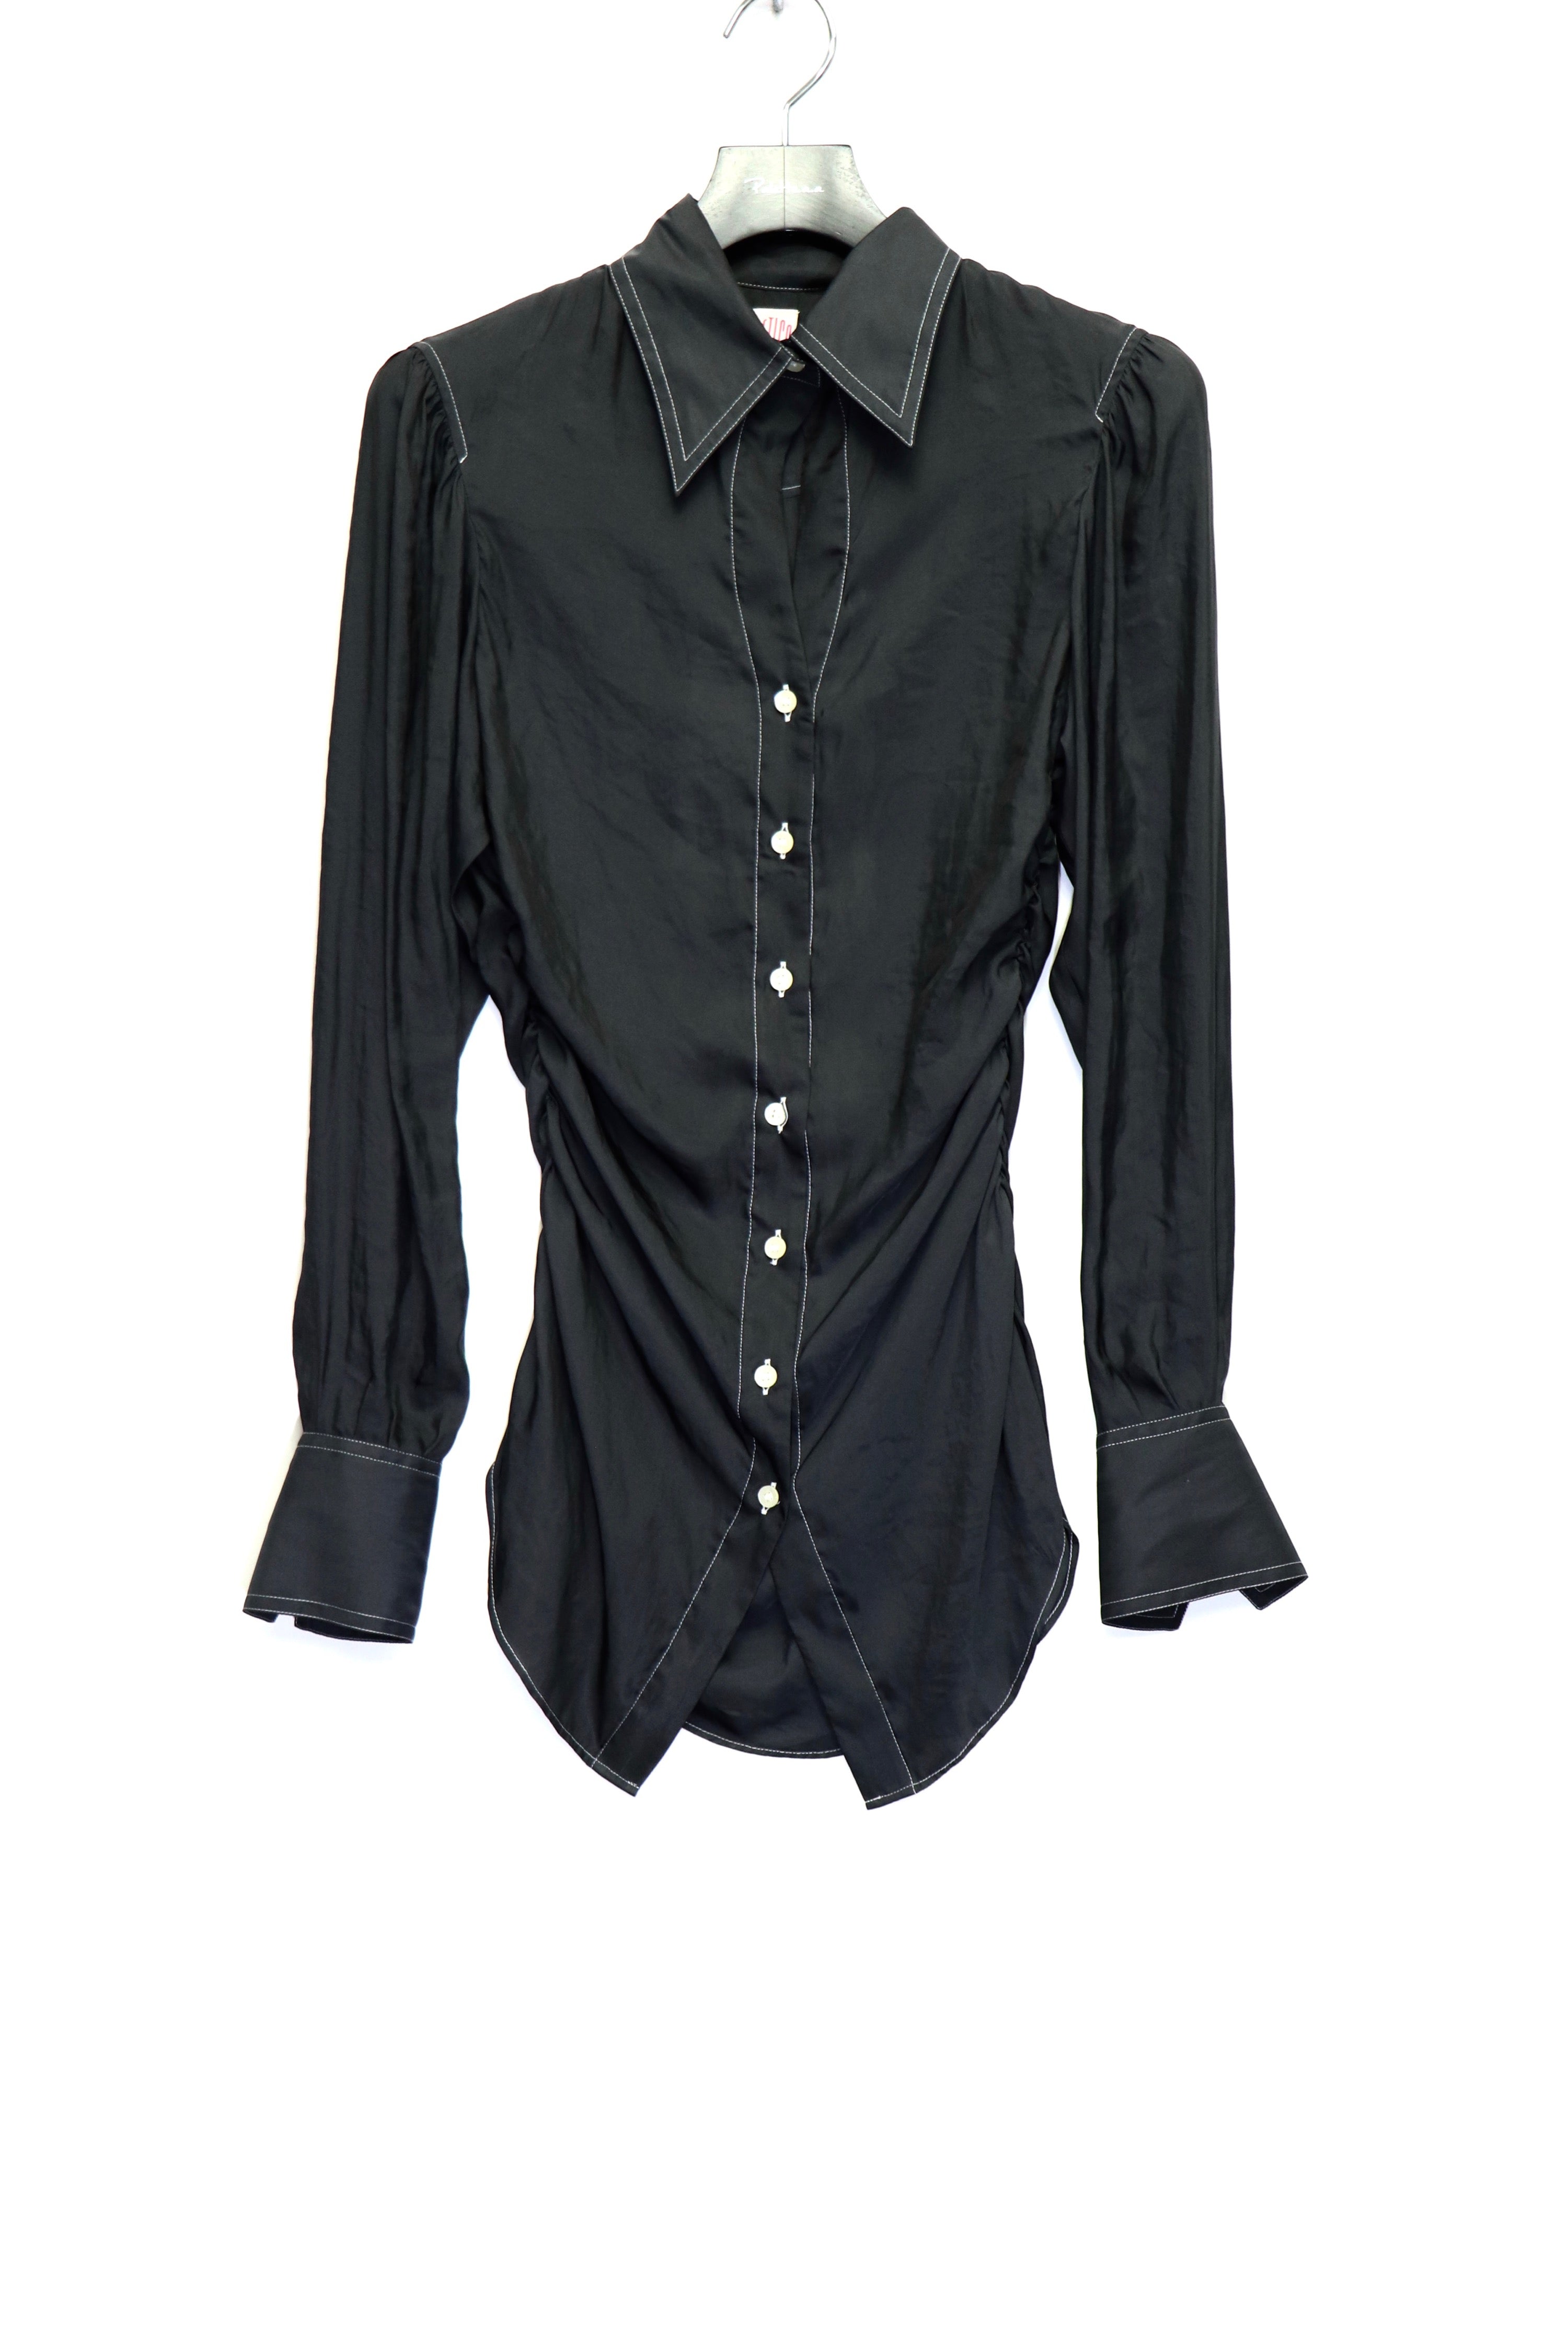 FETICO(フェティコ)のGathered Satin Shirt Black(シャツ)の通販